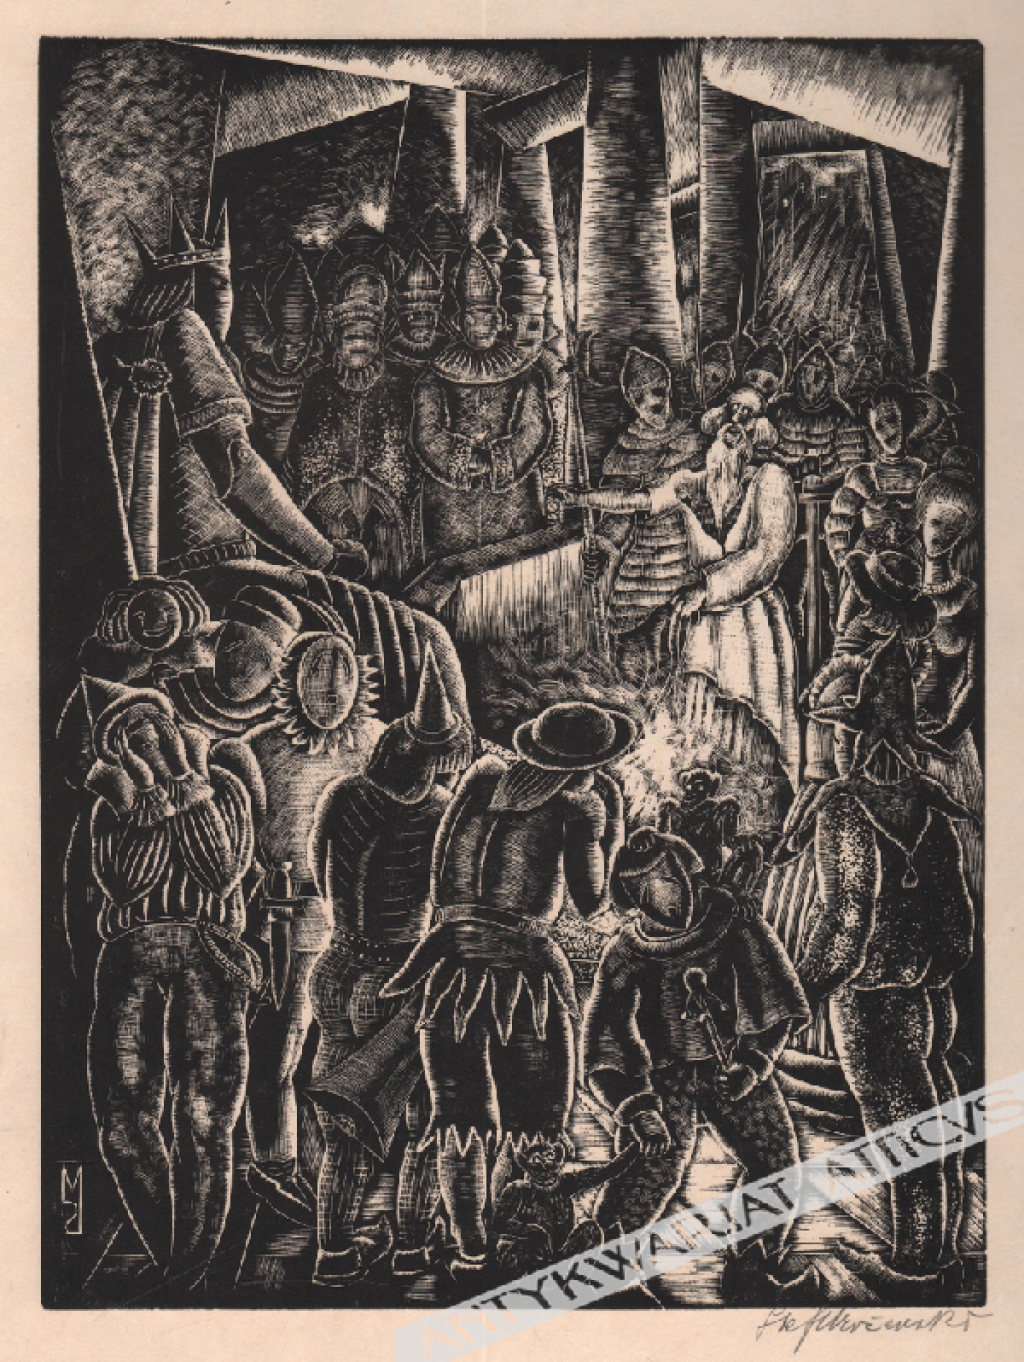 [grafika, 1929] Scena ze starcem i dworzanami (z cyklu "Le Roi au masque d’or")